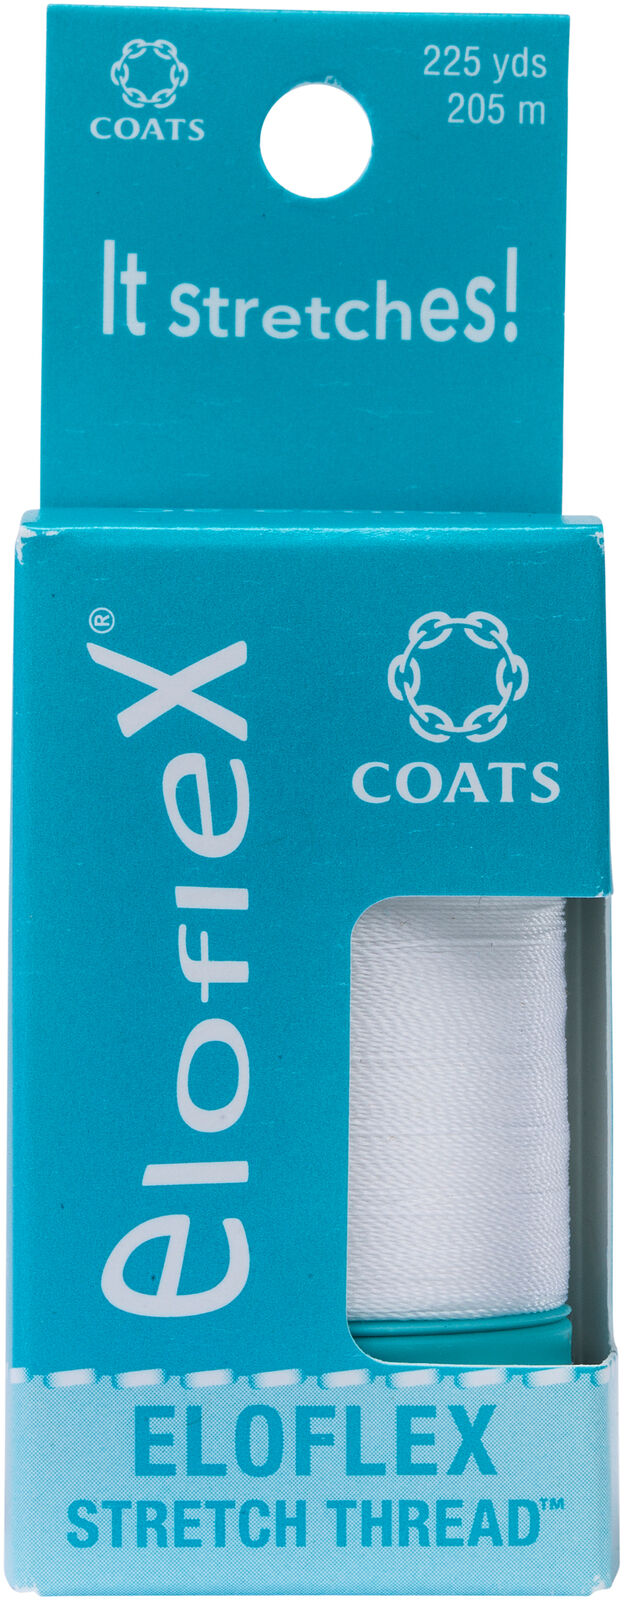 Coats Eloflex Stretch Thread 225yd Box-White - 3 Pack Coats & Clark B992-0100